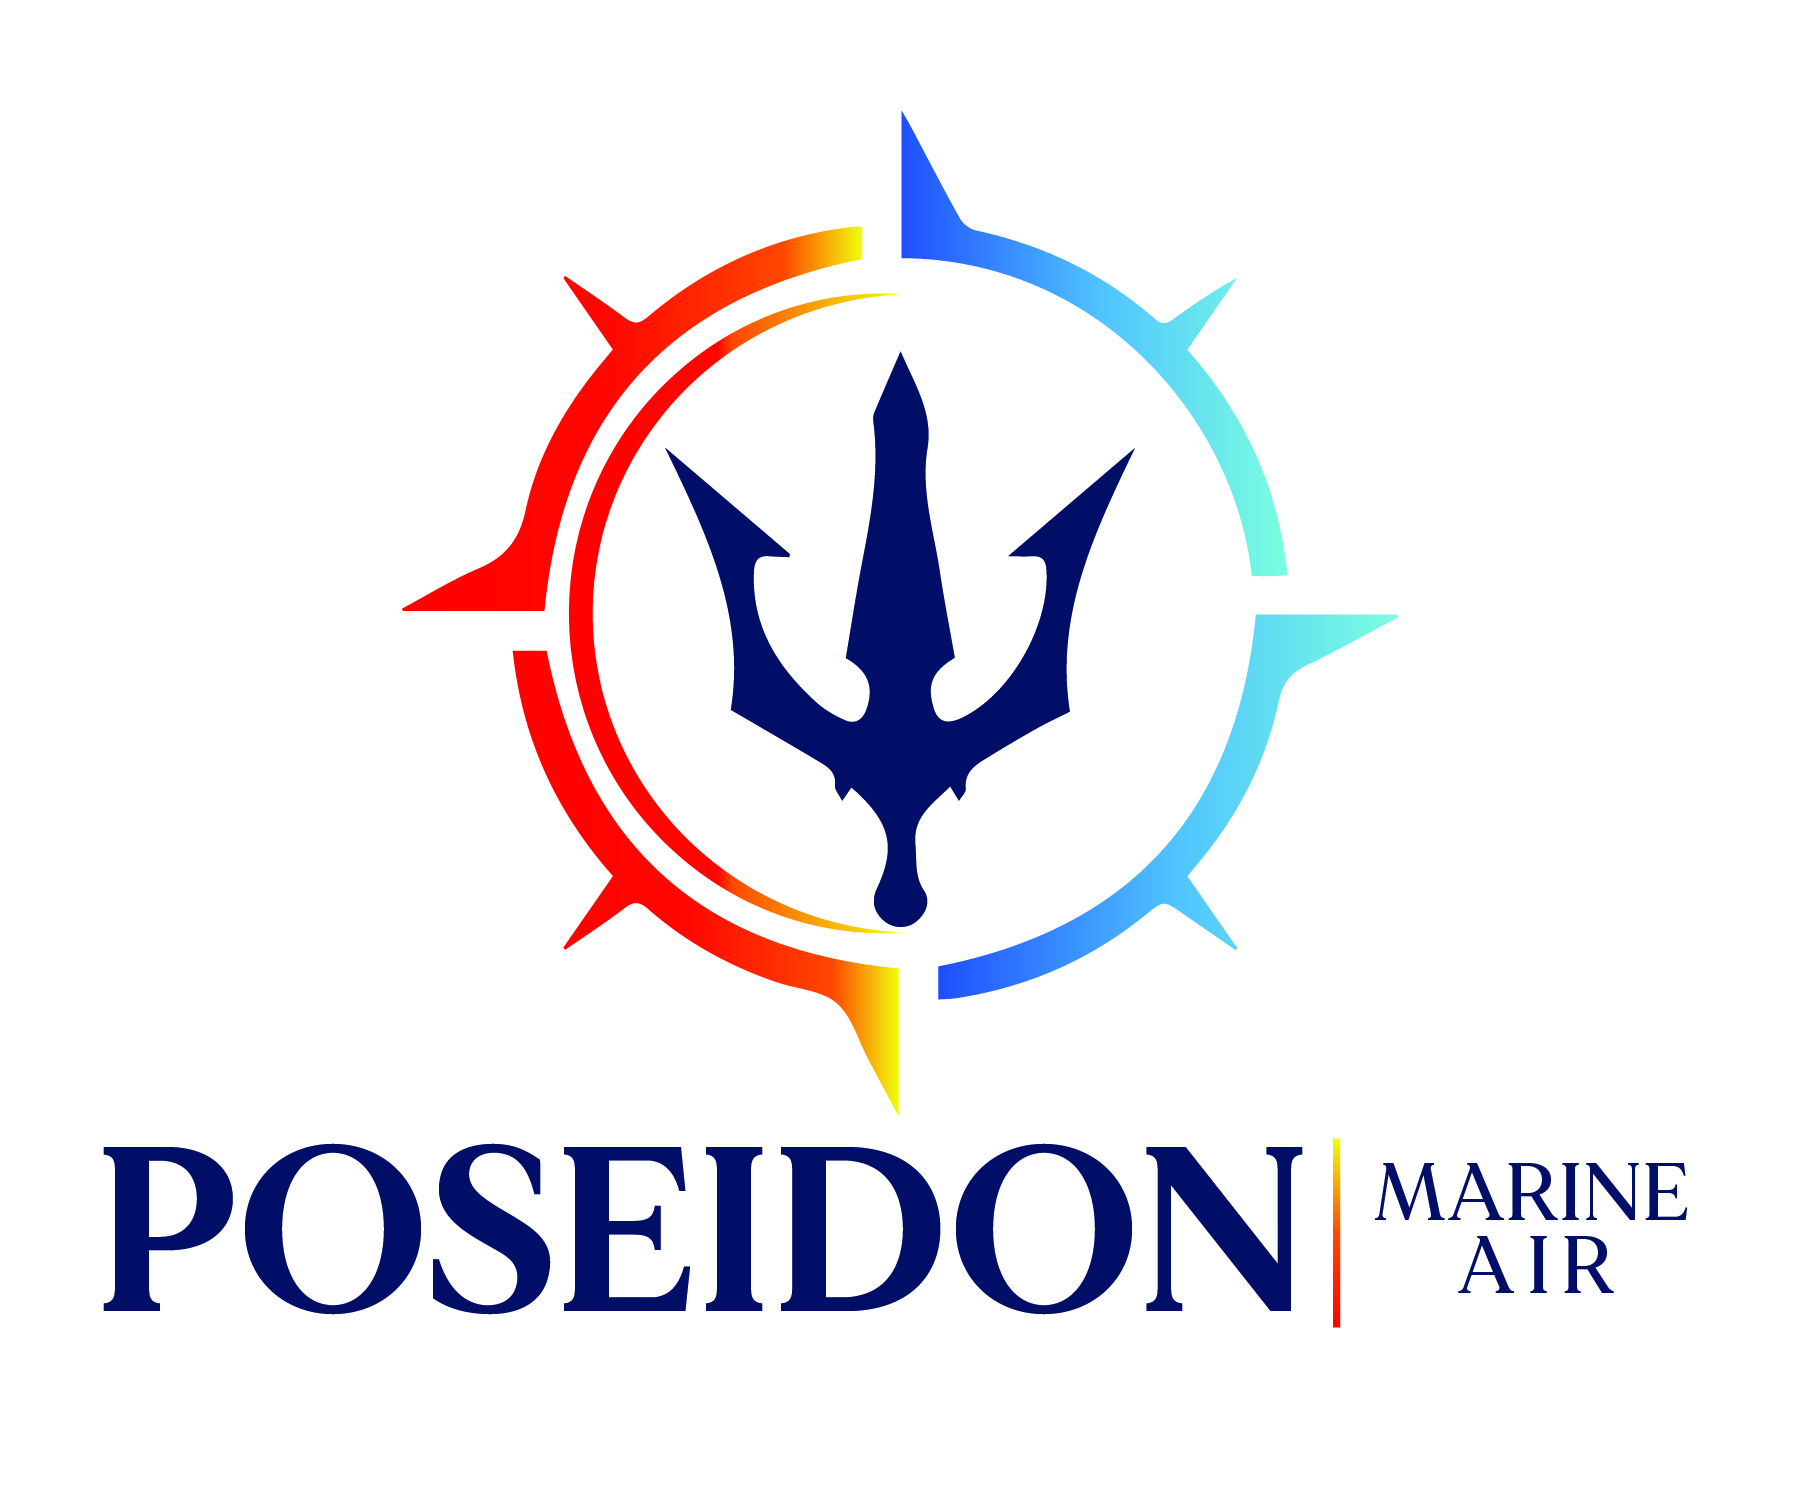 Poseidon Marine Air